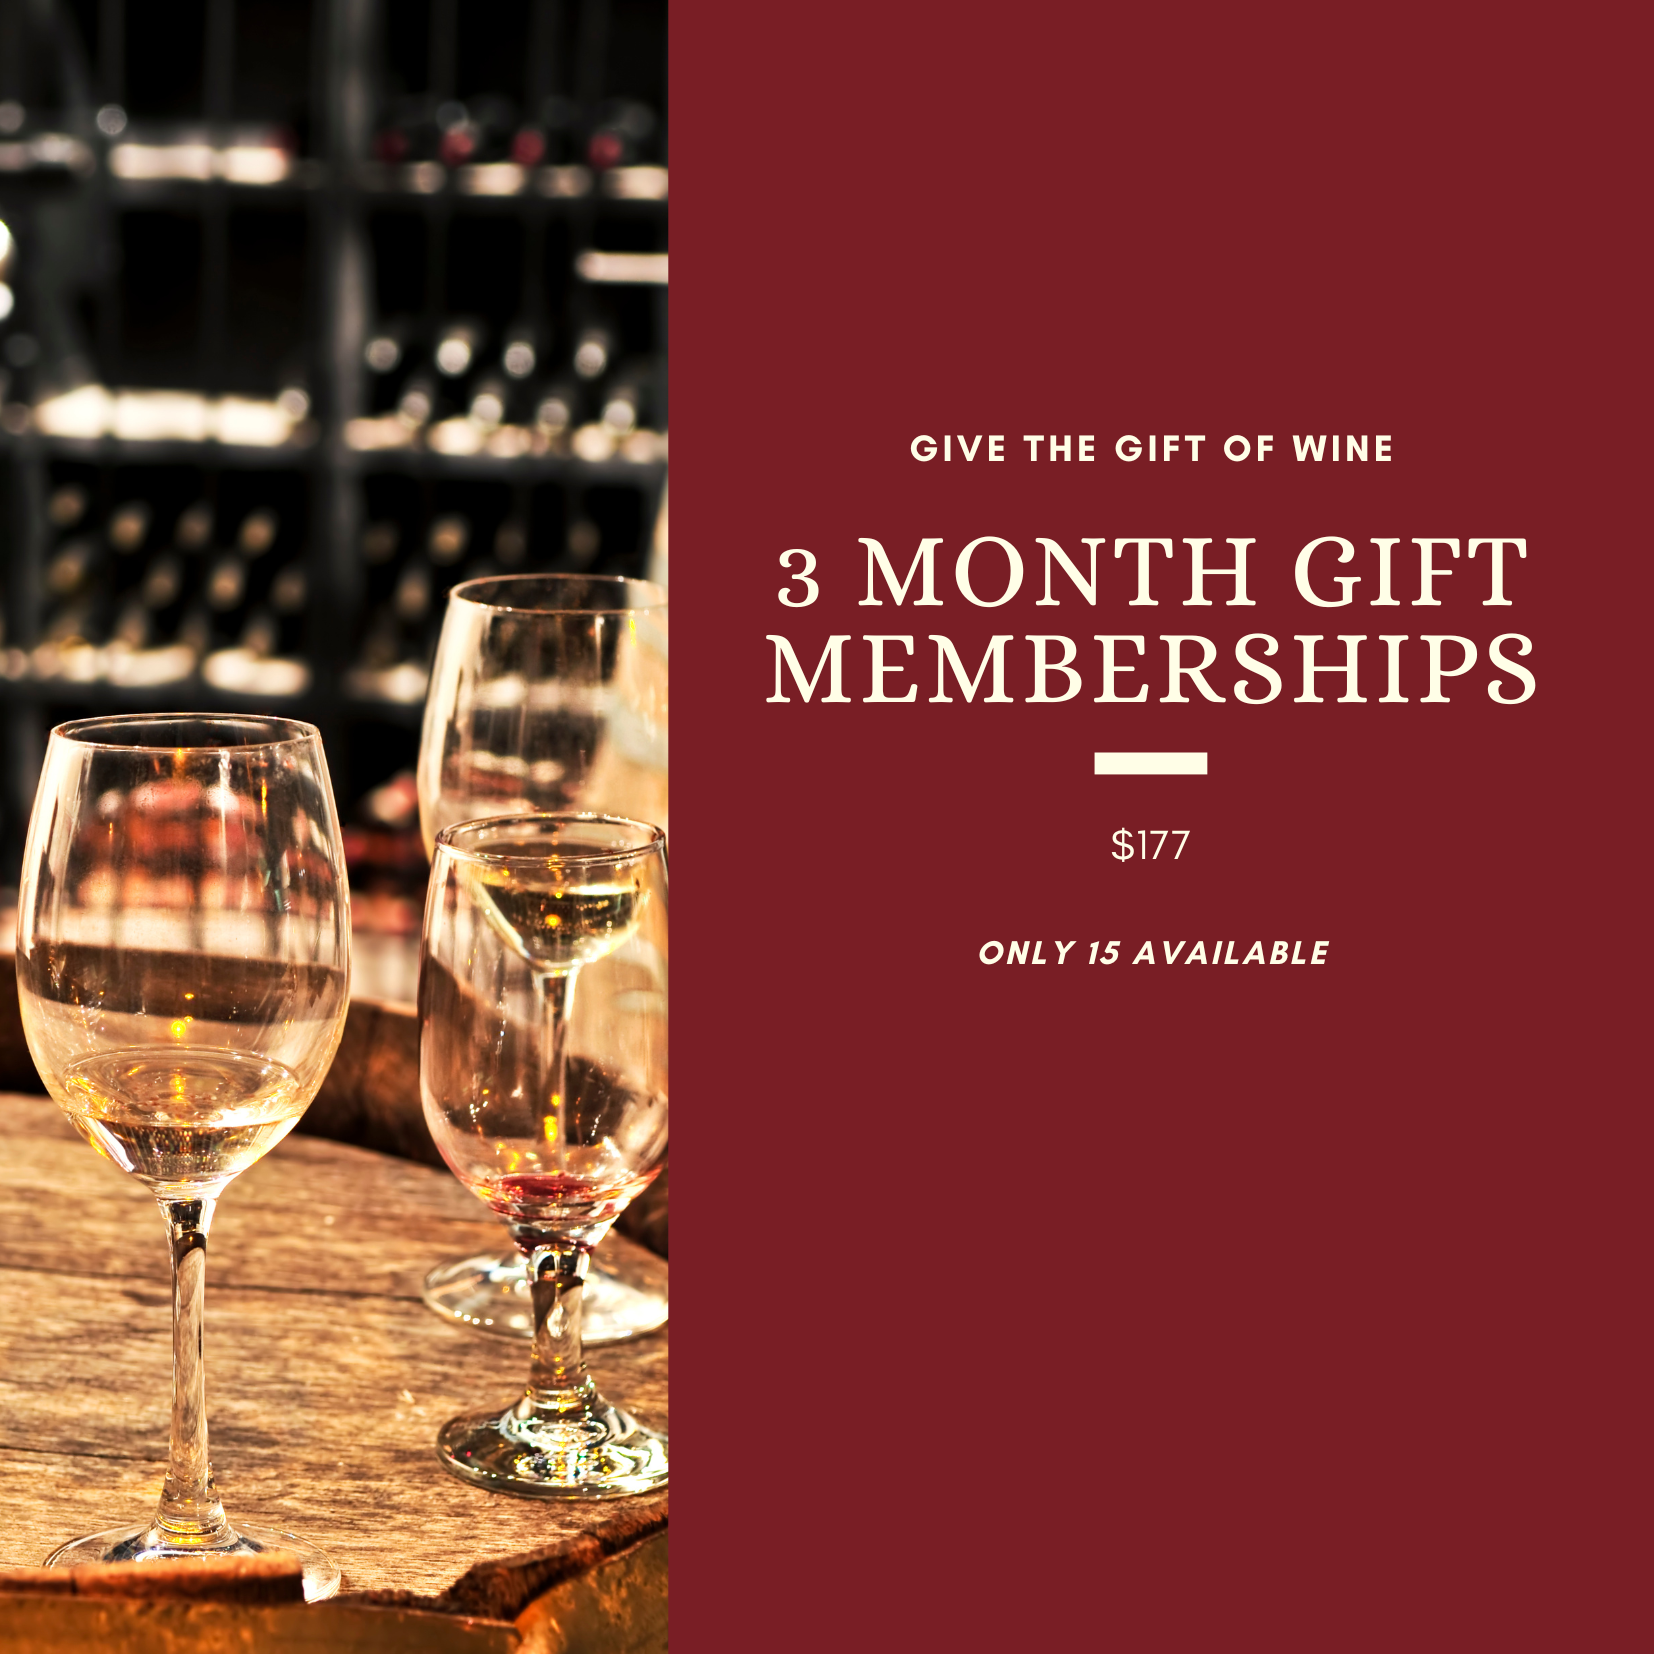 Wine club gift memberships